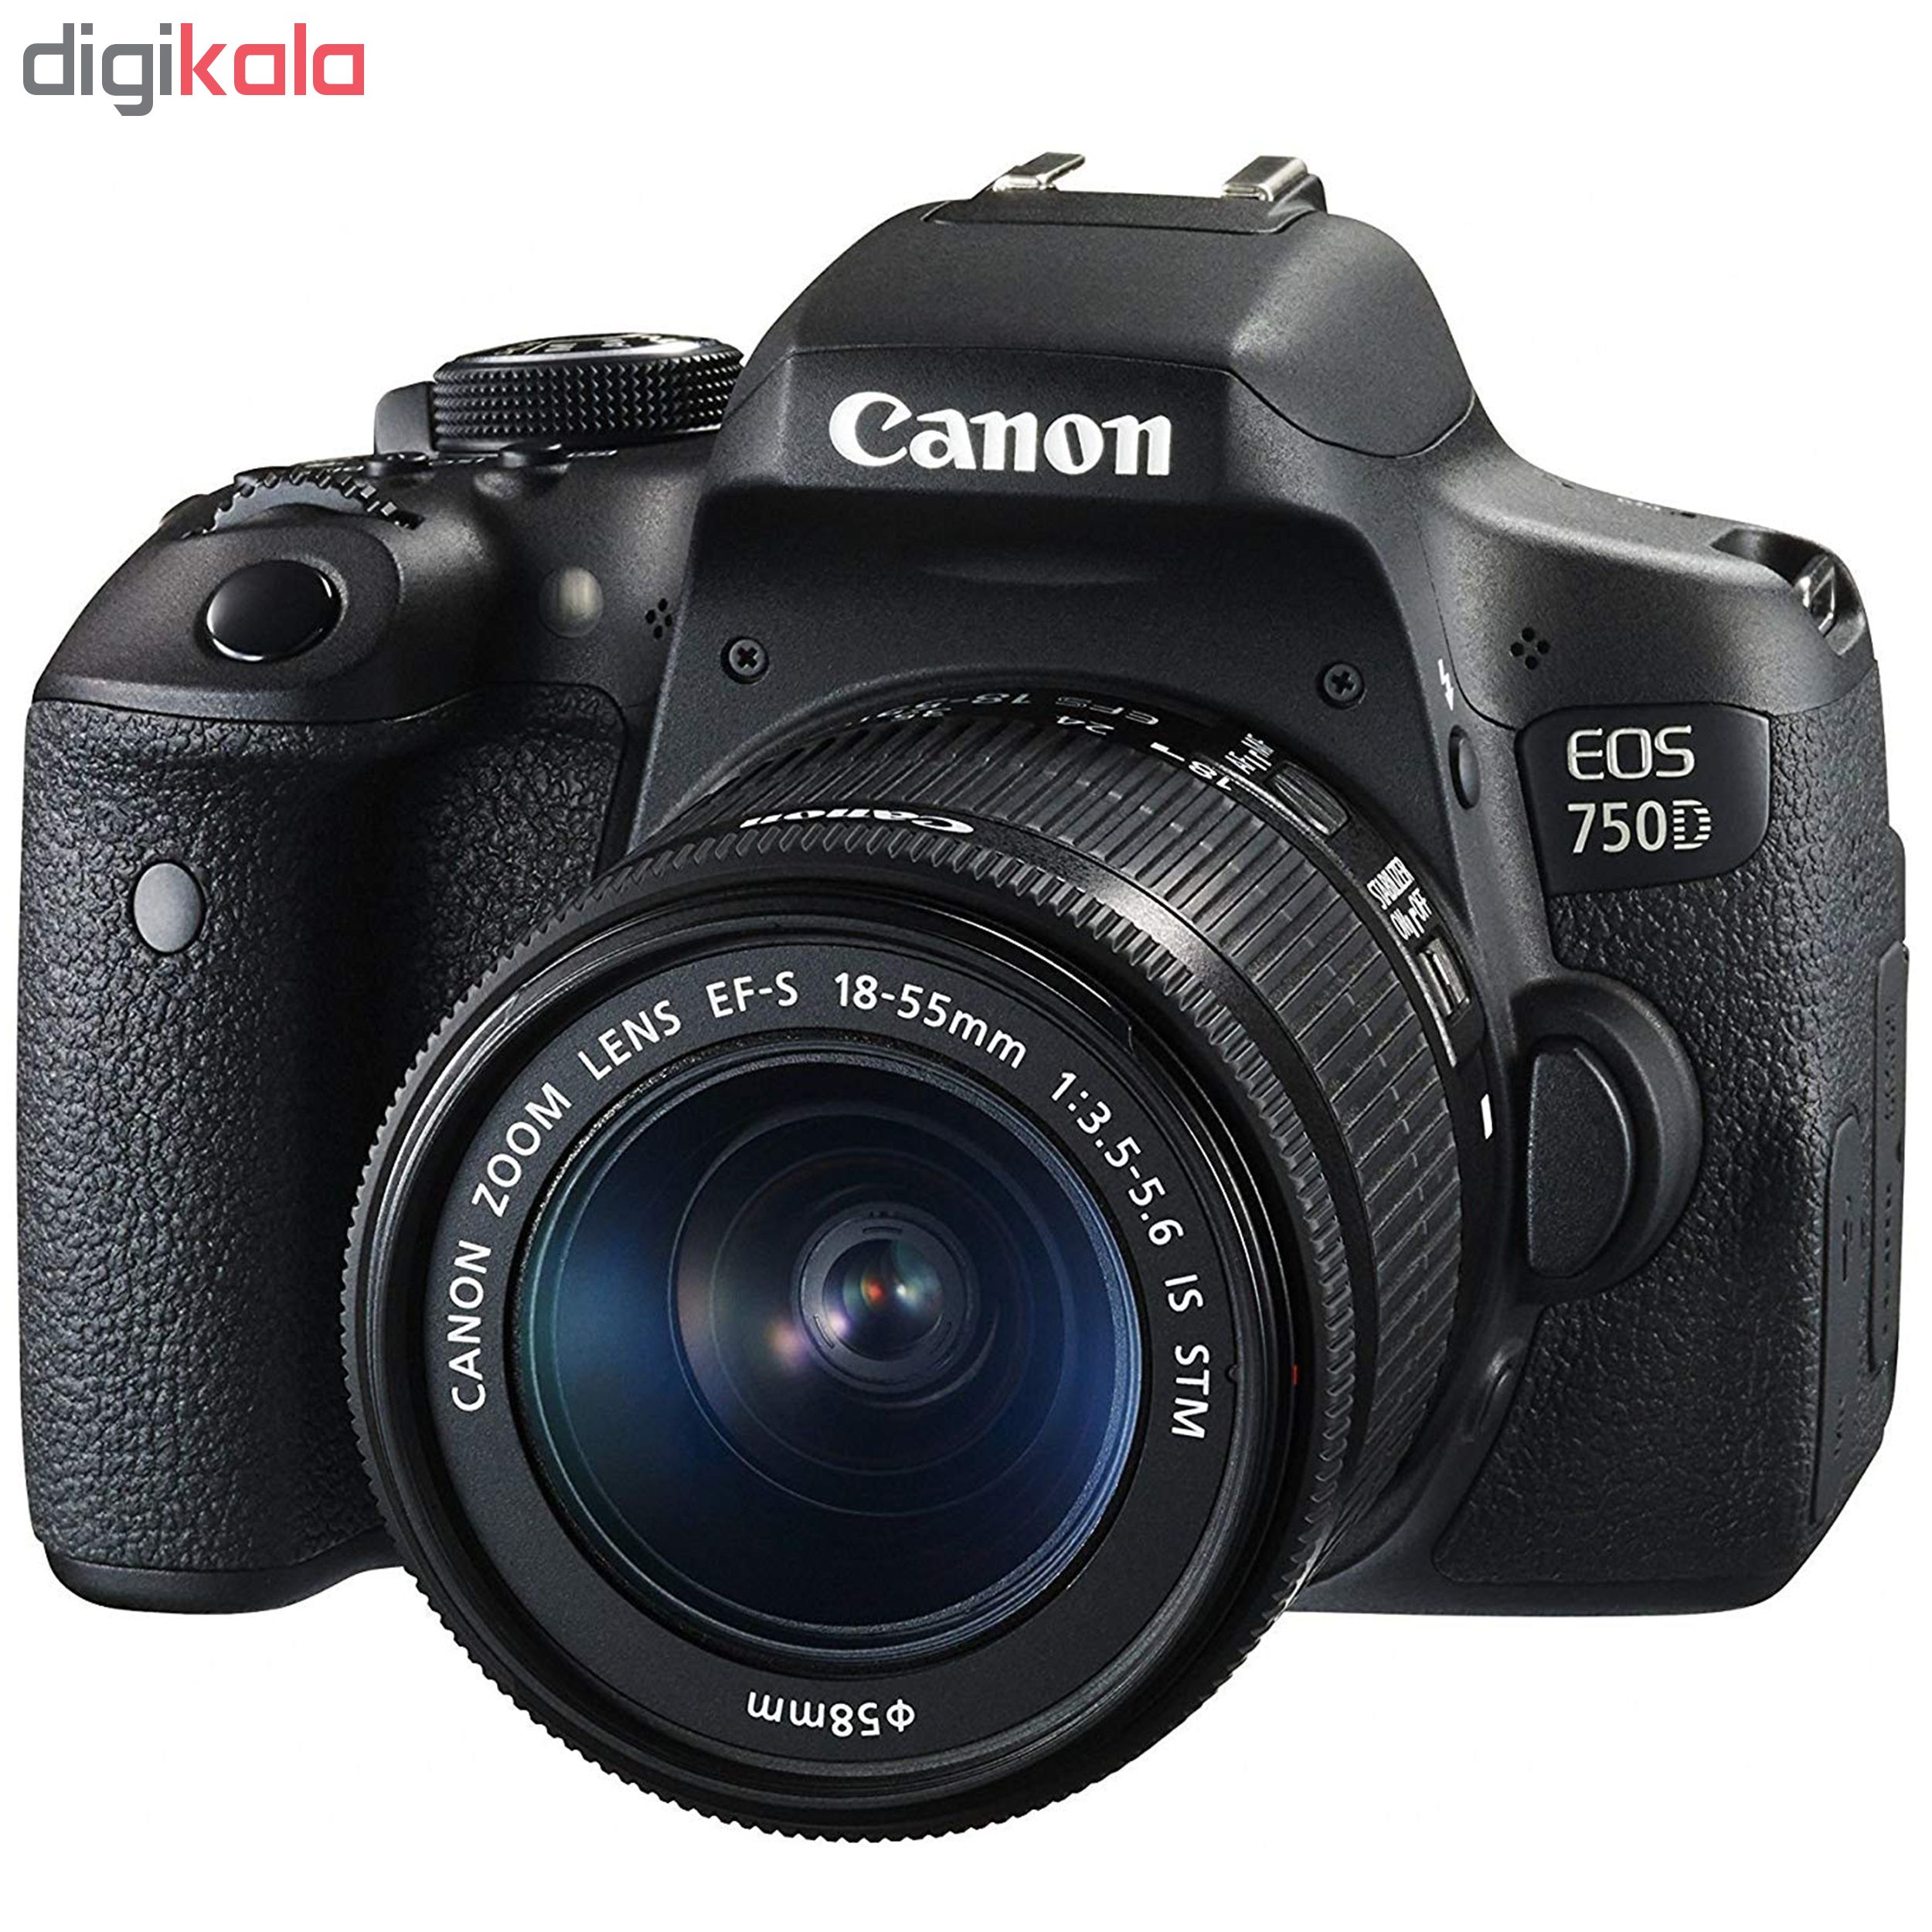 دوربین دیجیتال کانن مدل EOS 750D به همراه لنز 55-18 میلی متری IS STM و لوازم جانبی